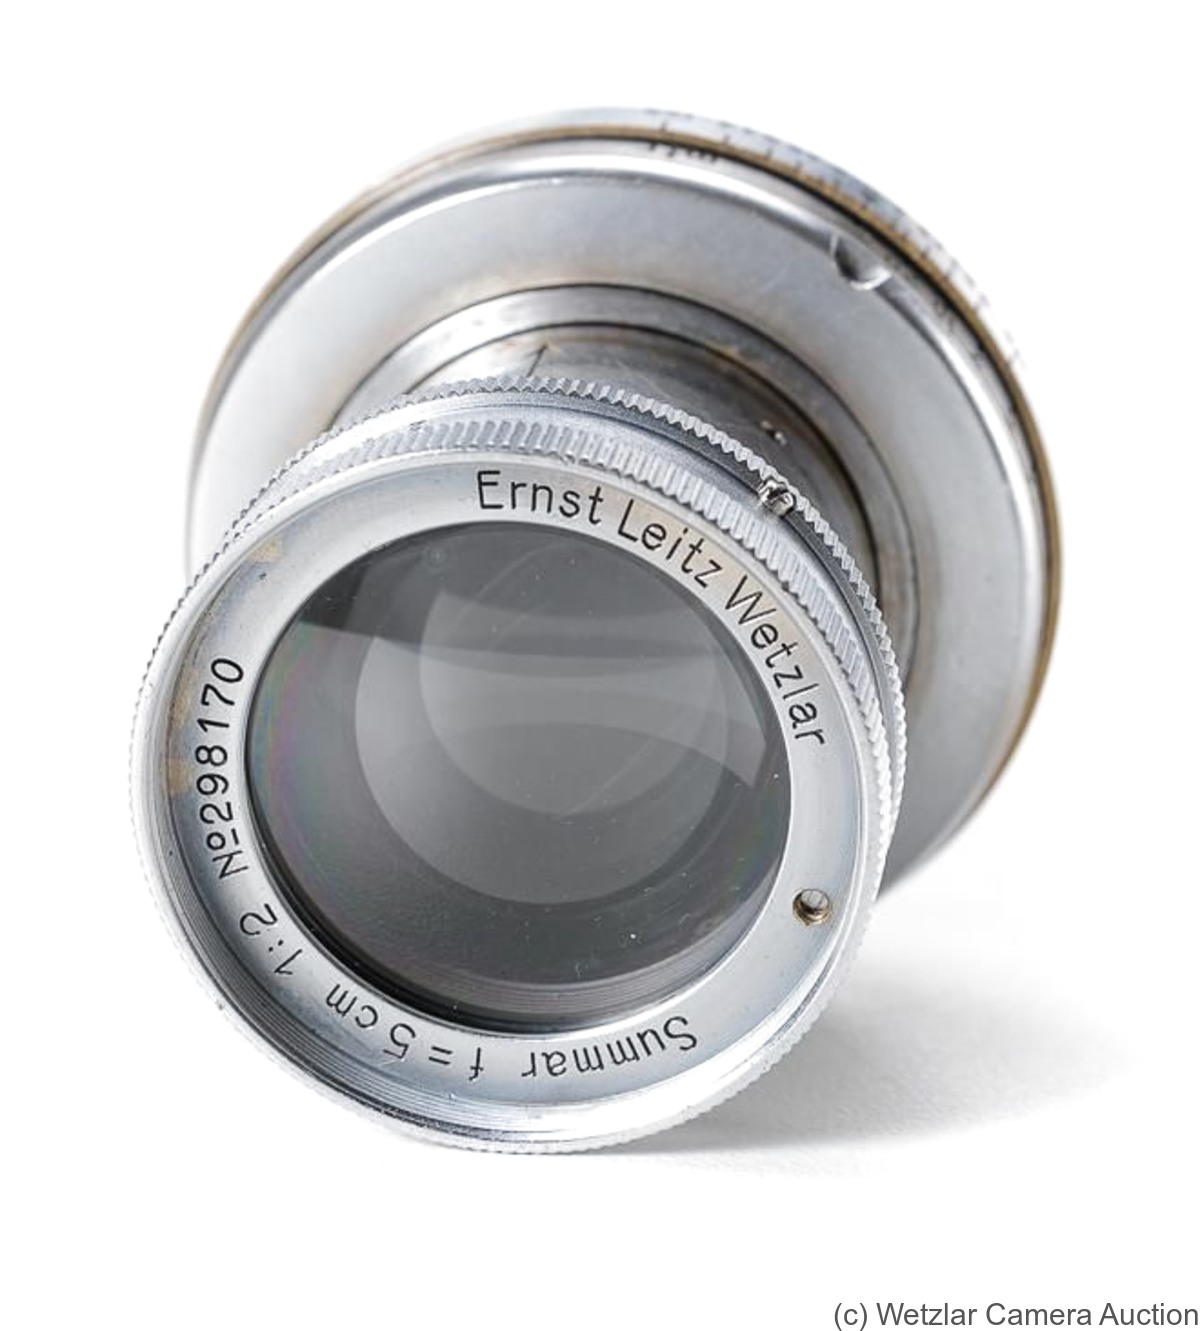 Leitz: 50mm (5cm) f2 Summar (SM, collapsible, chrome, chrome front) camera